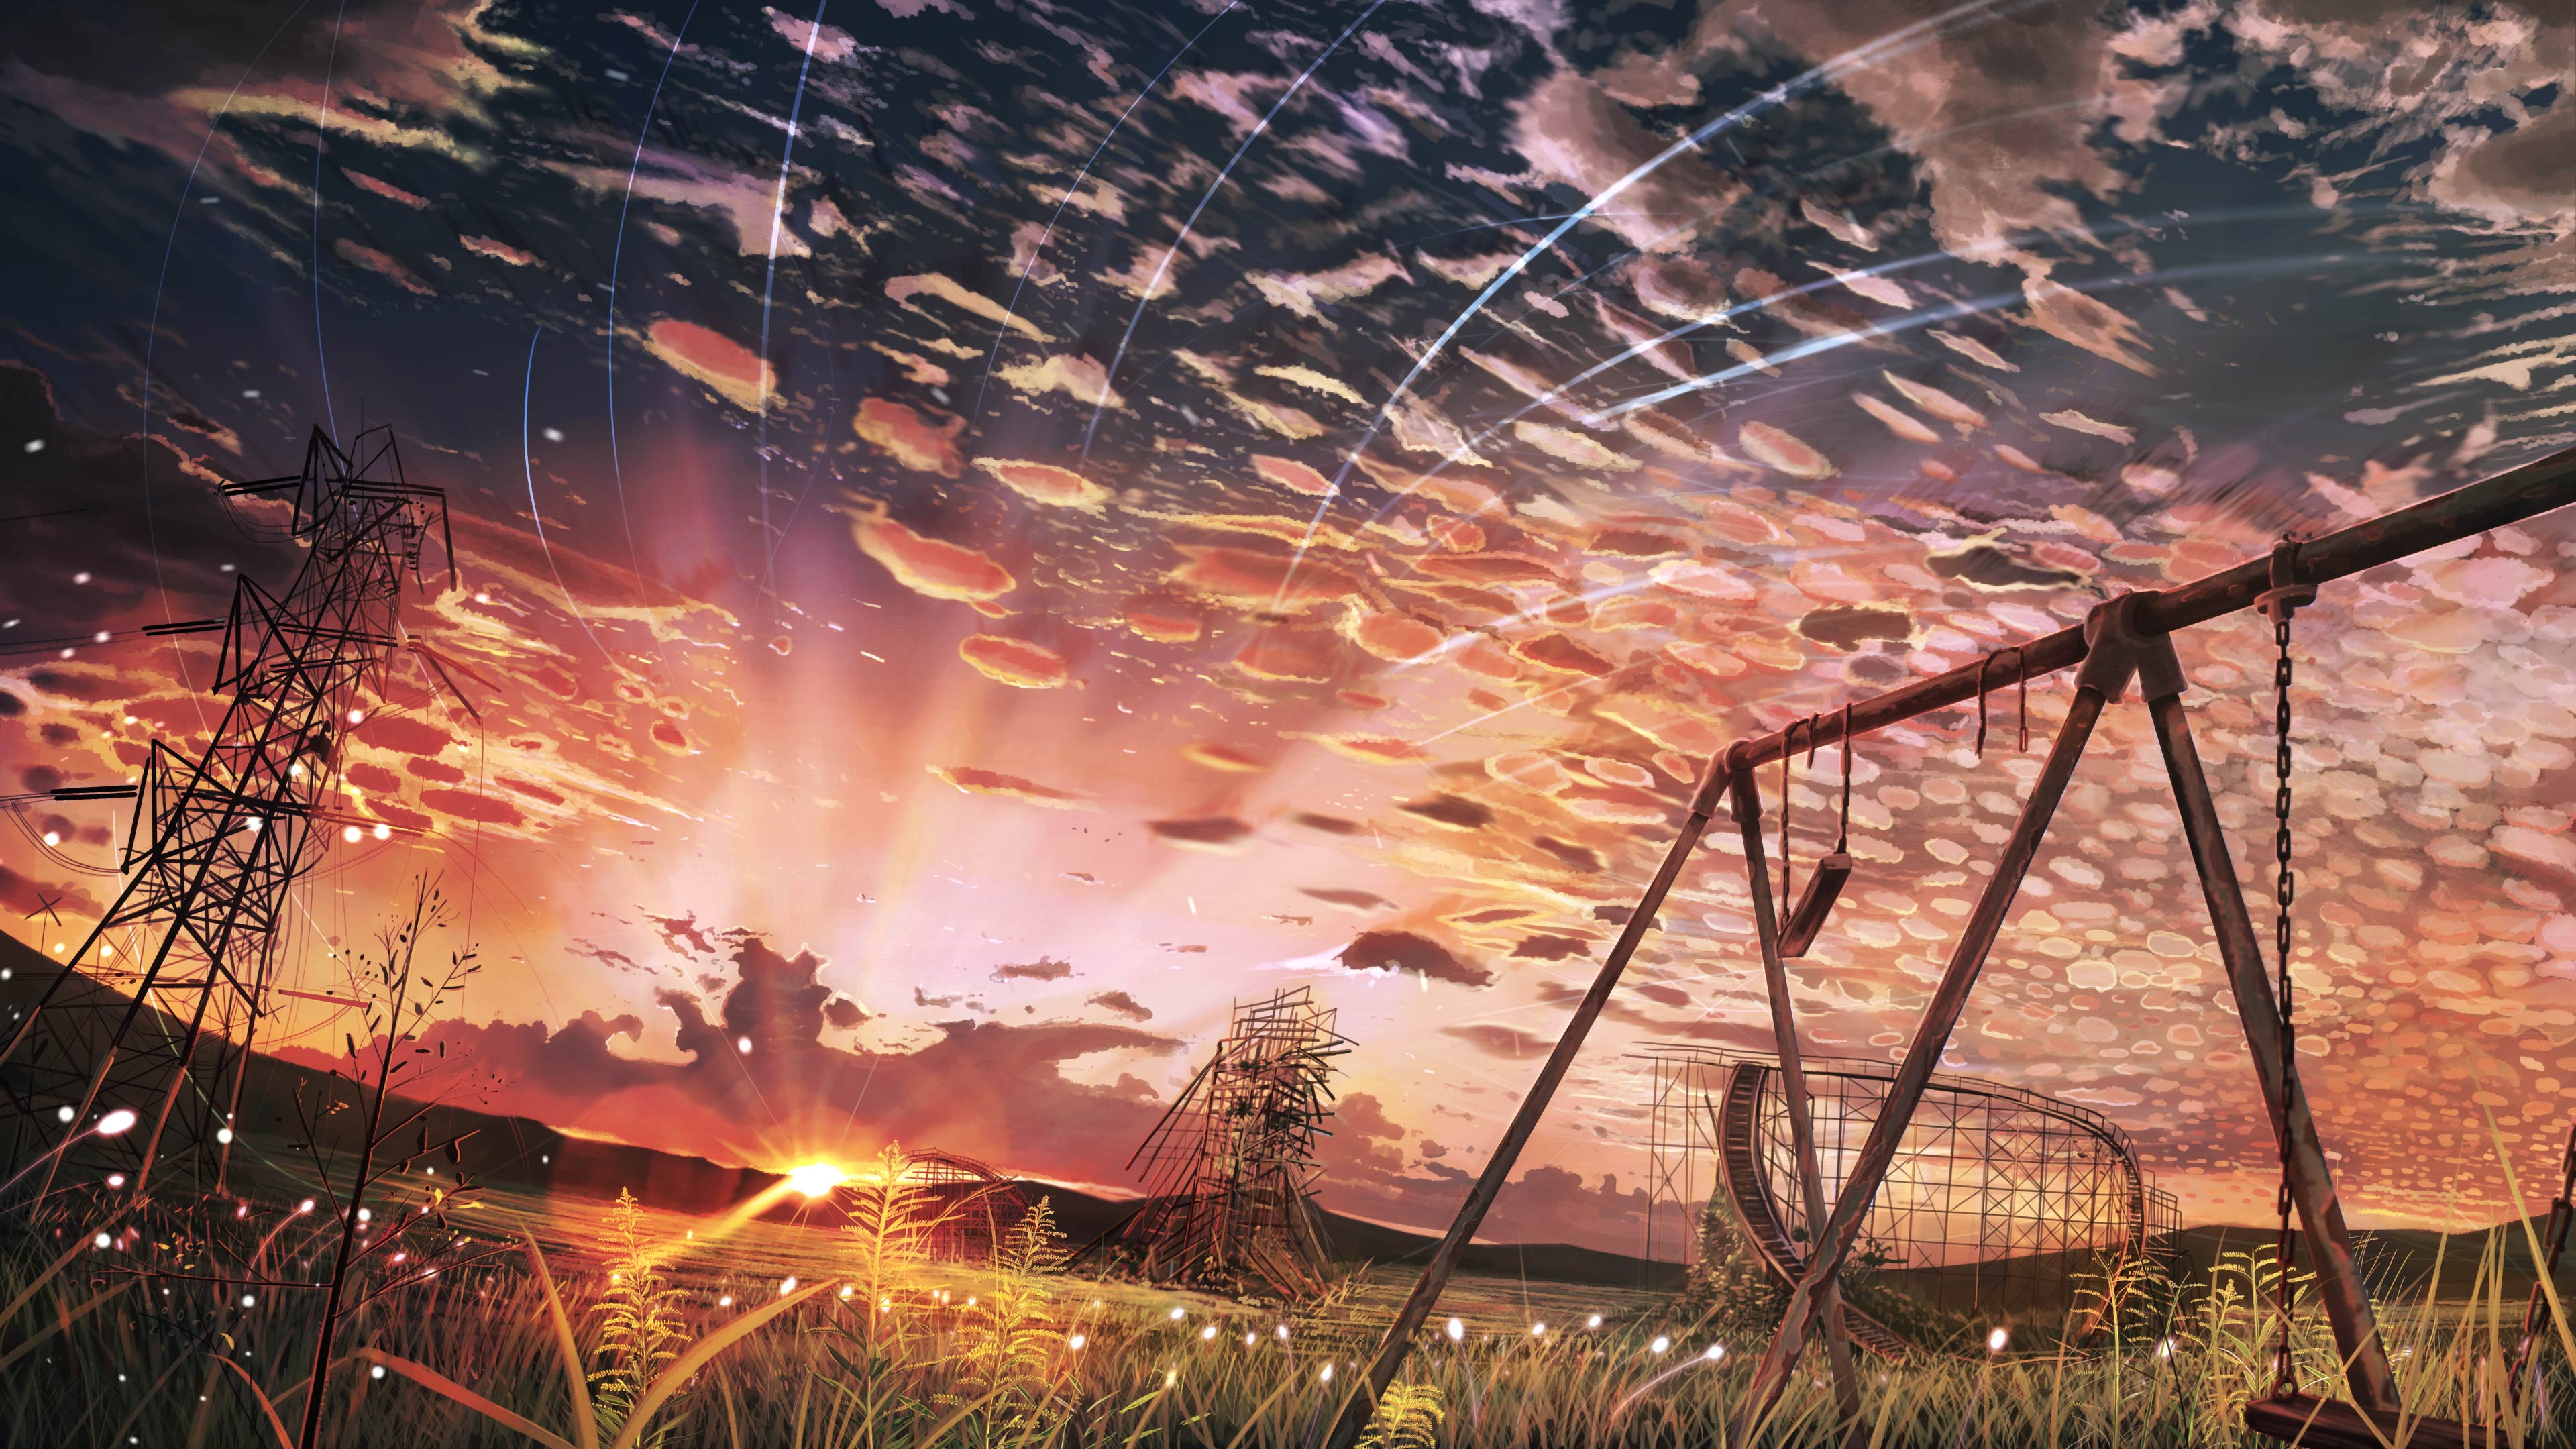 Anime 3840x2160 anime digital outdoors sky clouds sunlight sunset power lines swings artwork Banishment